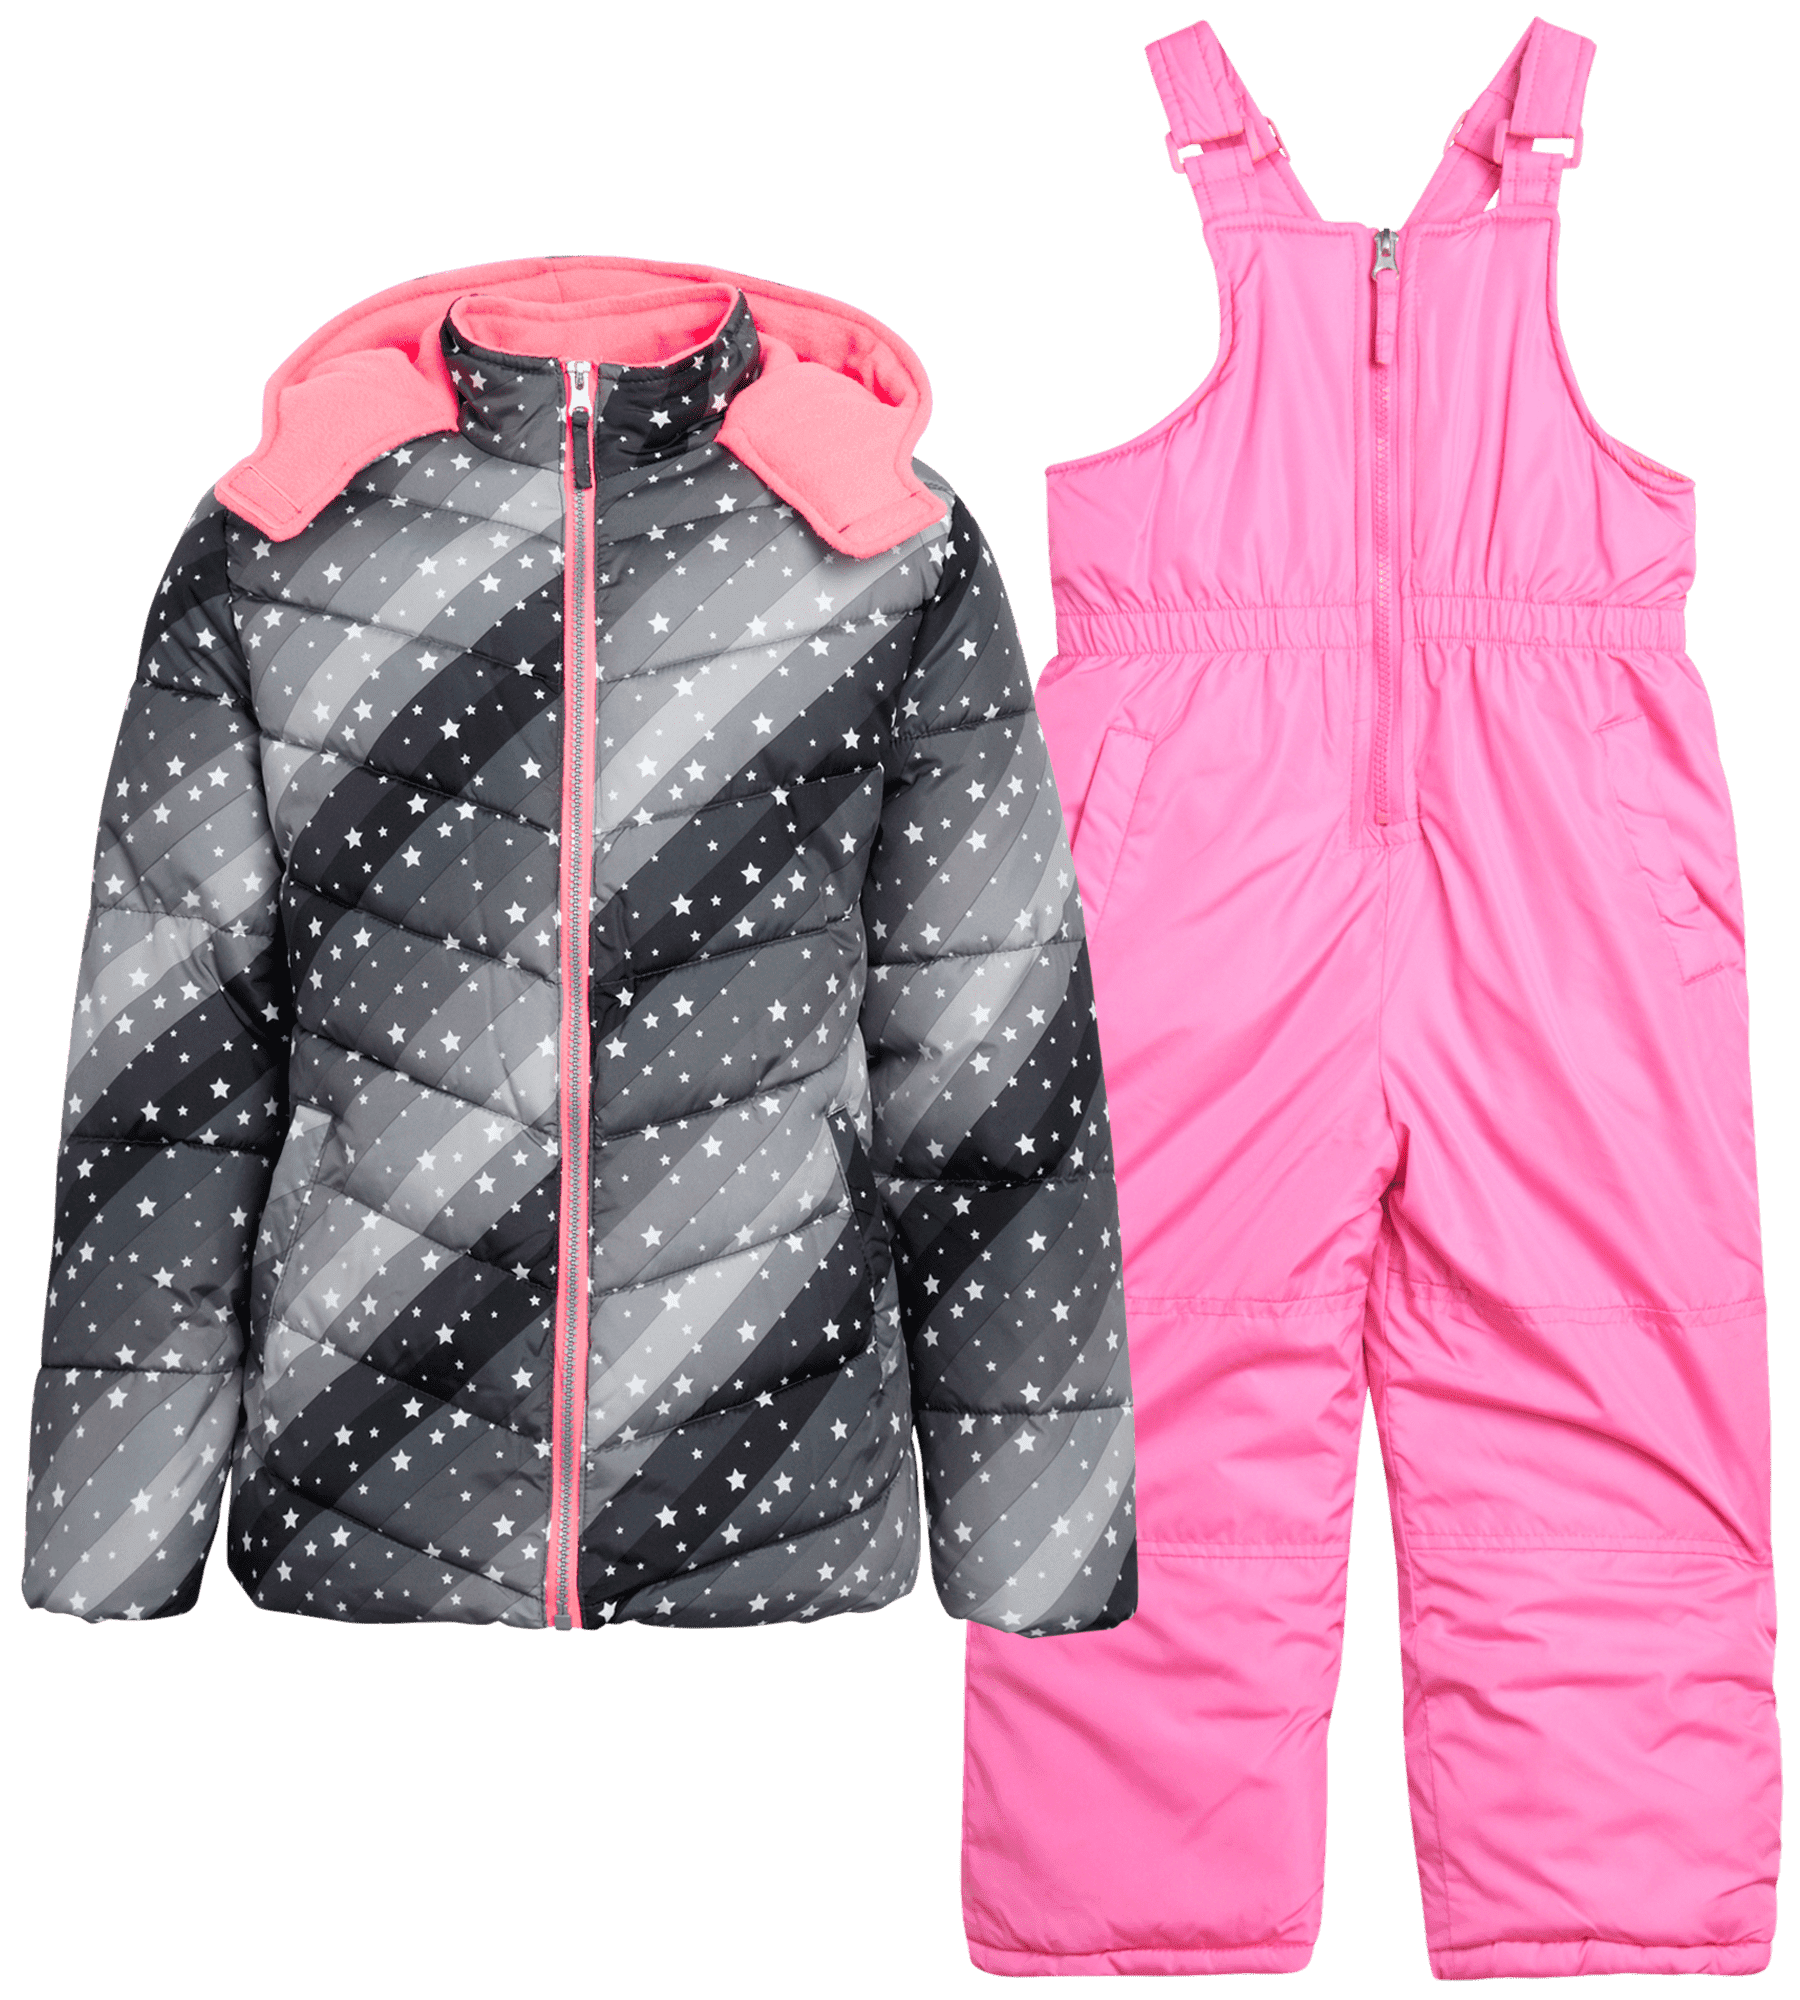 Pink Platinum Girls' Snowsuit - 2 Piece Insulated Ski Jacket and Snow ...